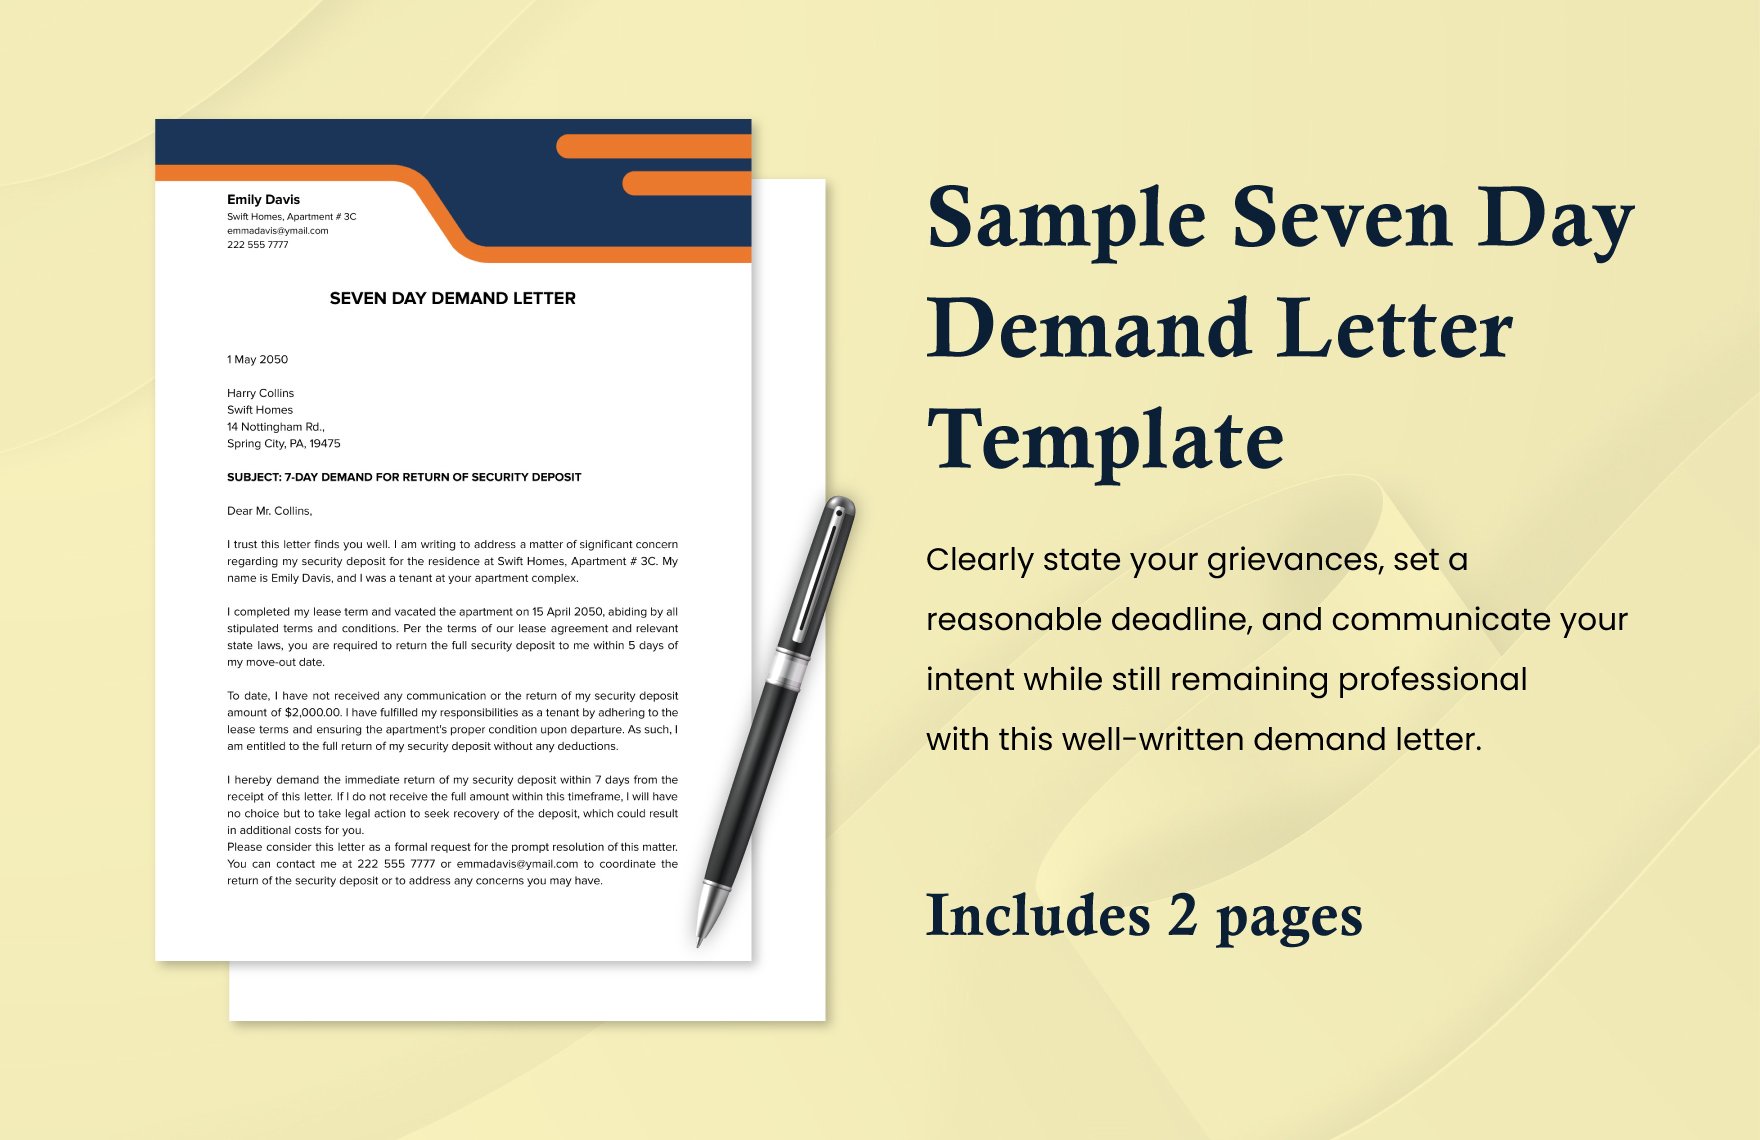 Sample Seven Day Demand Letter Template